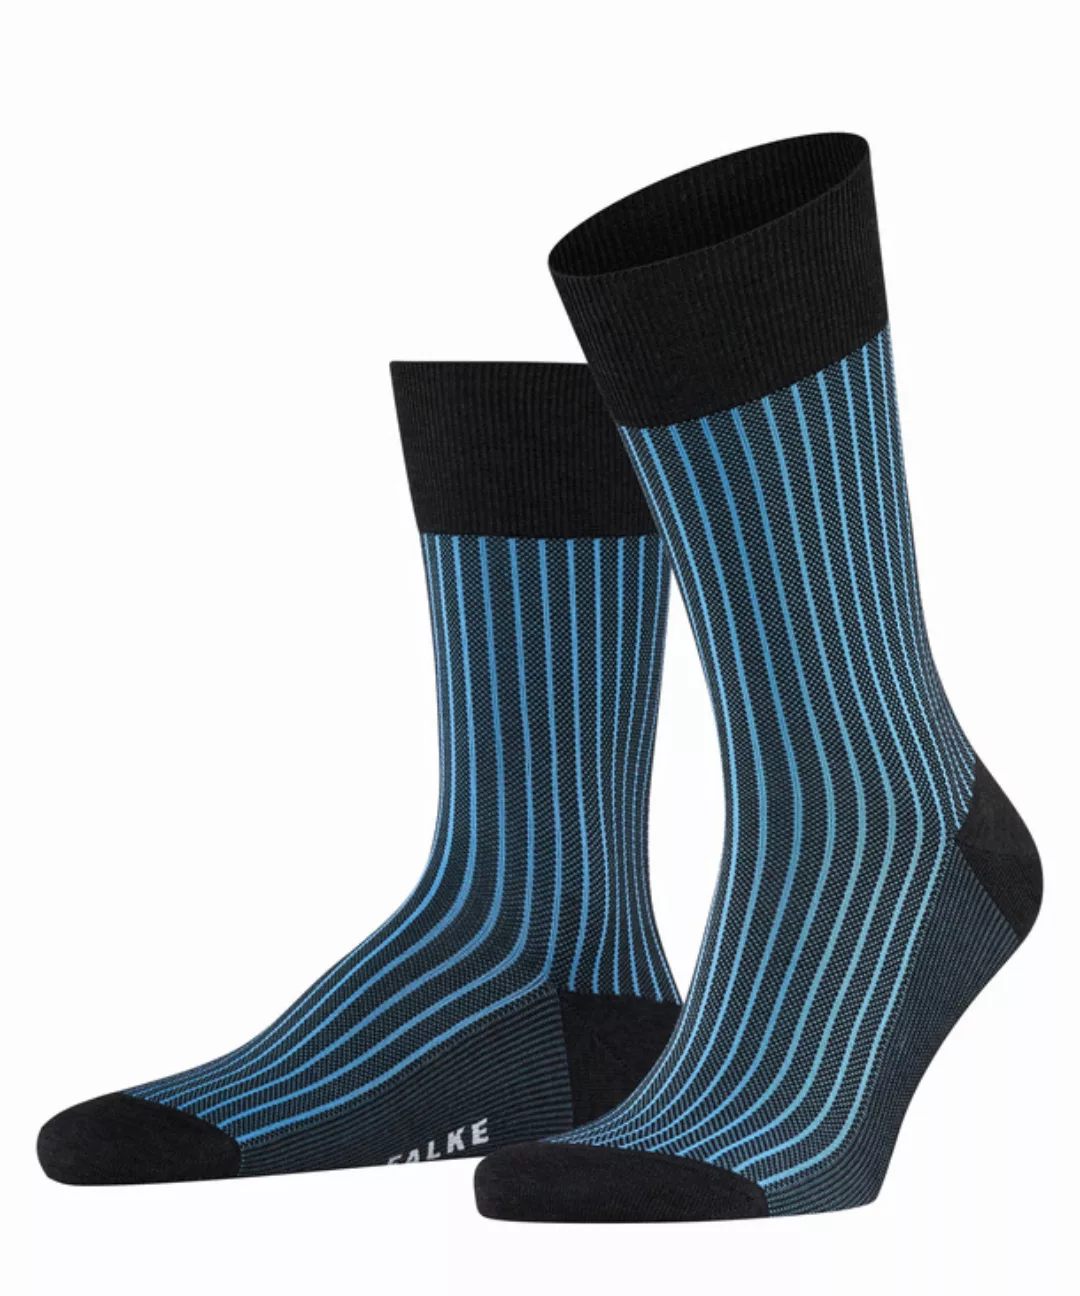 FALKE Oxford Stripe Herren Socken, 45-46, Grau, Jacquard, Baumwolle, 13396- günstig online kaufen